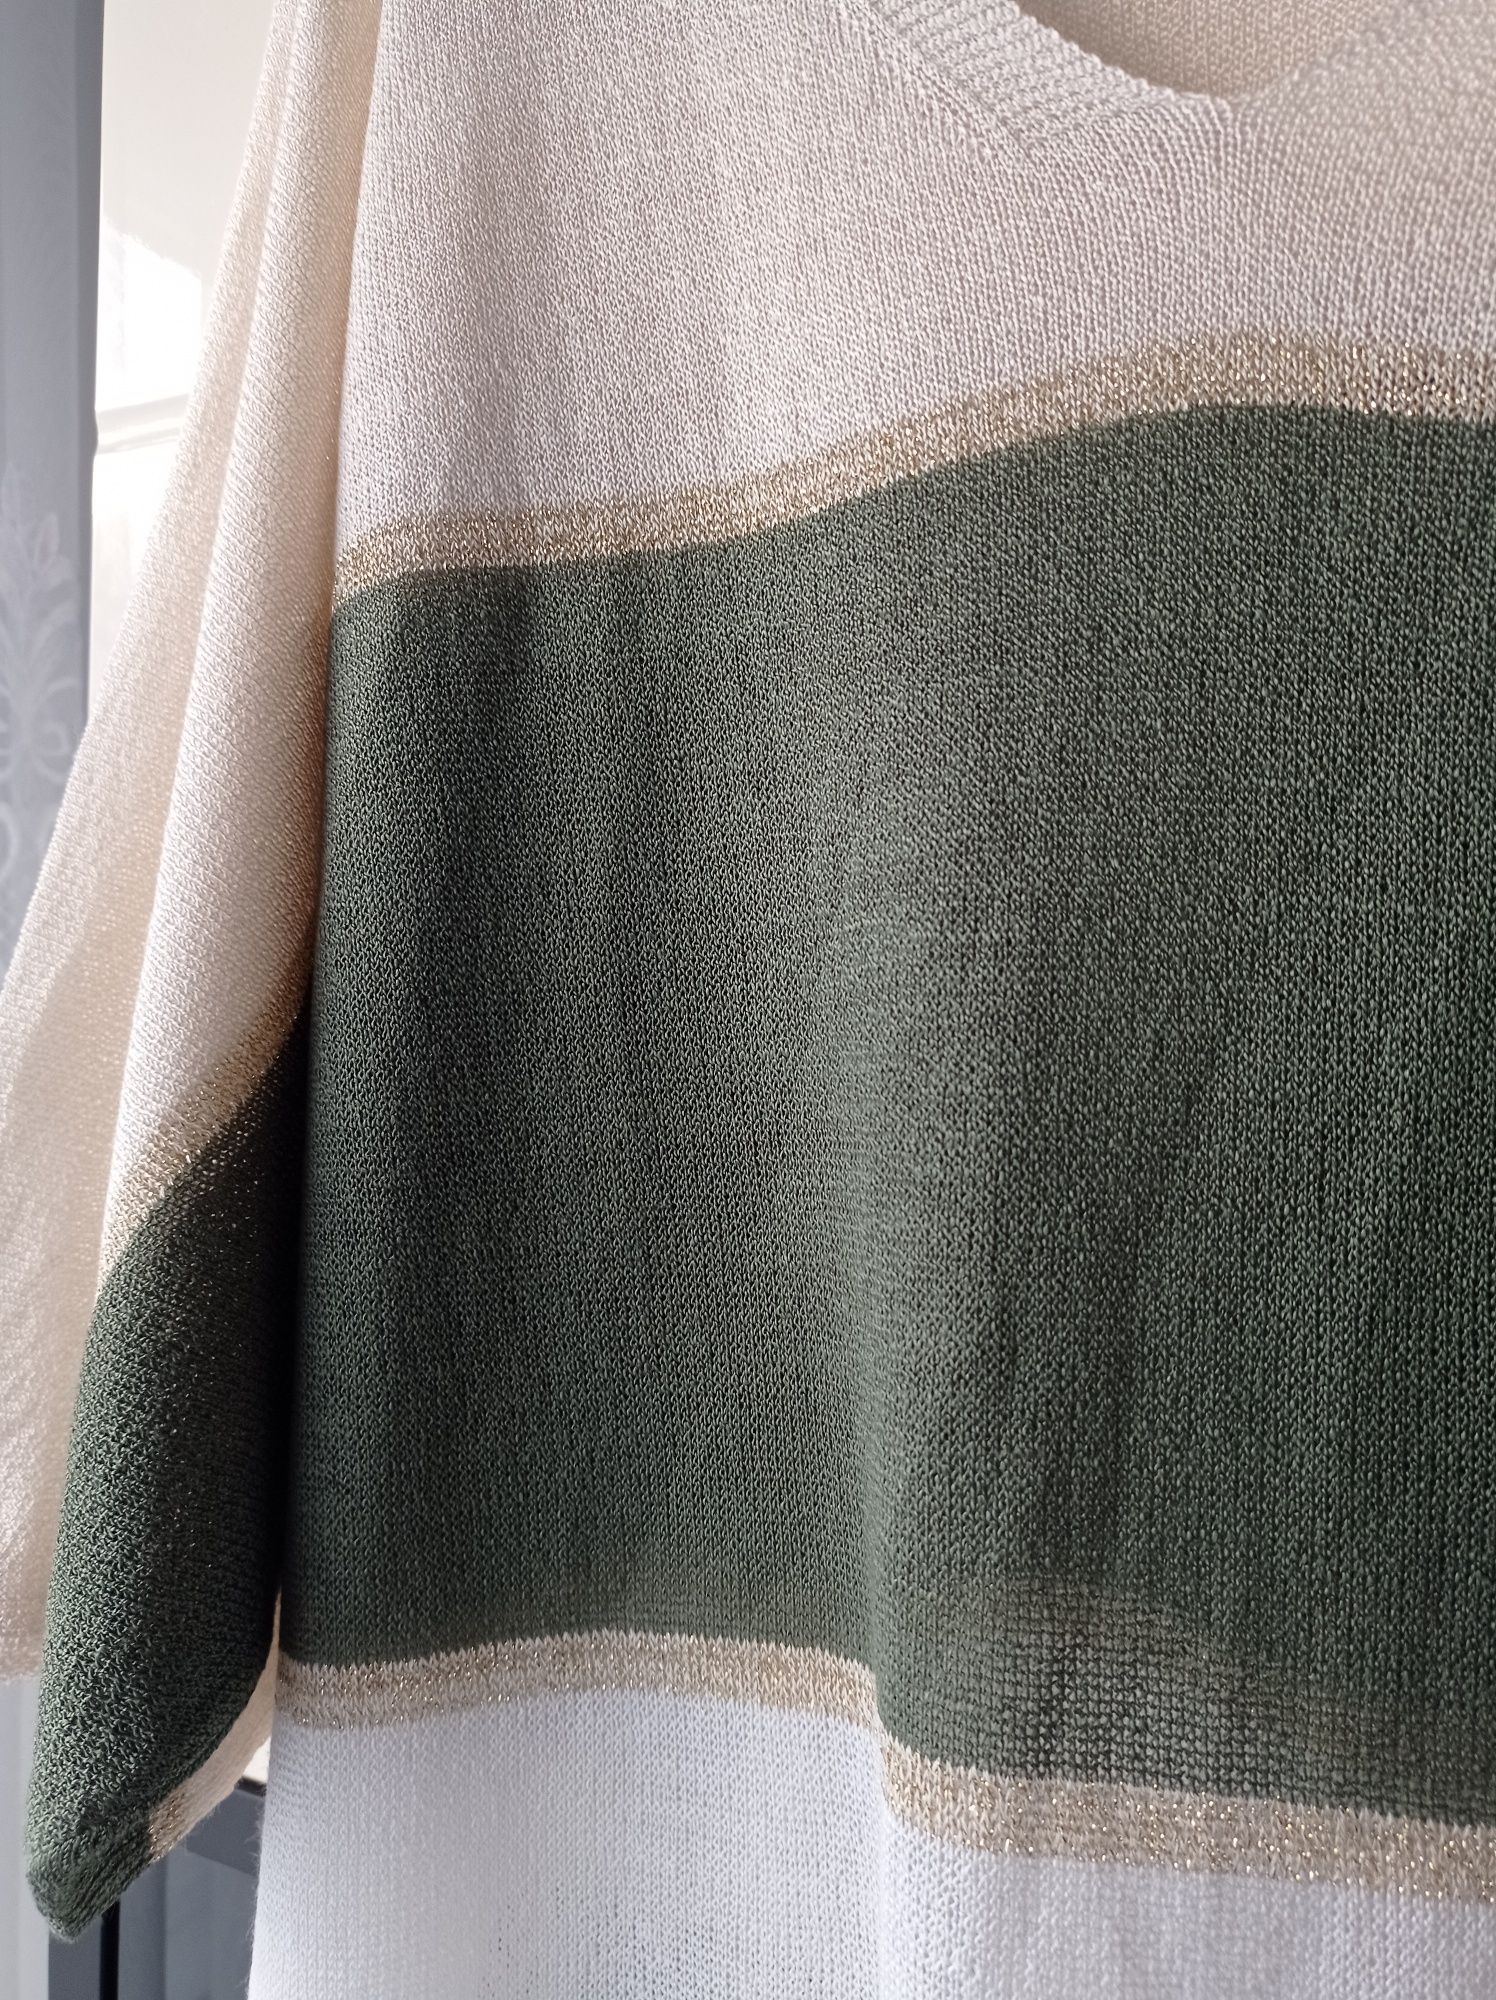 Tunika damska sweterkowa włoska nowa biust 130